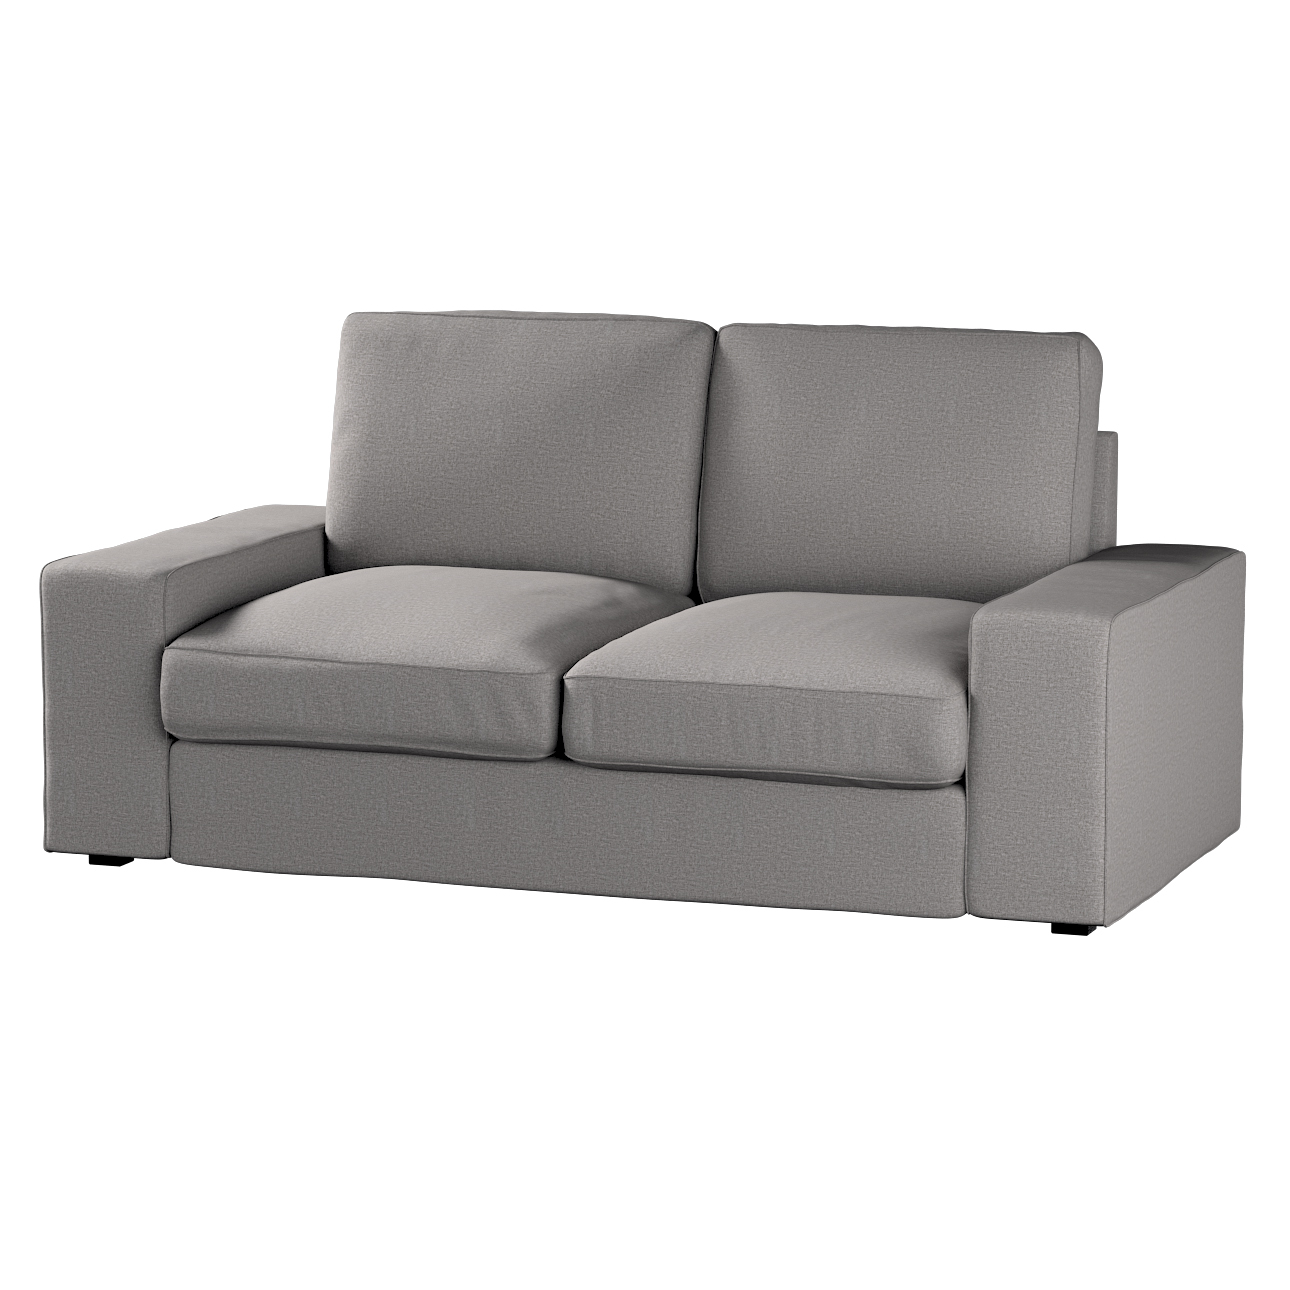 Bezug für Kivik 2-Sitzer Sofa, grau, Bezug für Sofa Kivik 2-Sitzer, Edinbur günstig online kaufen